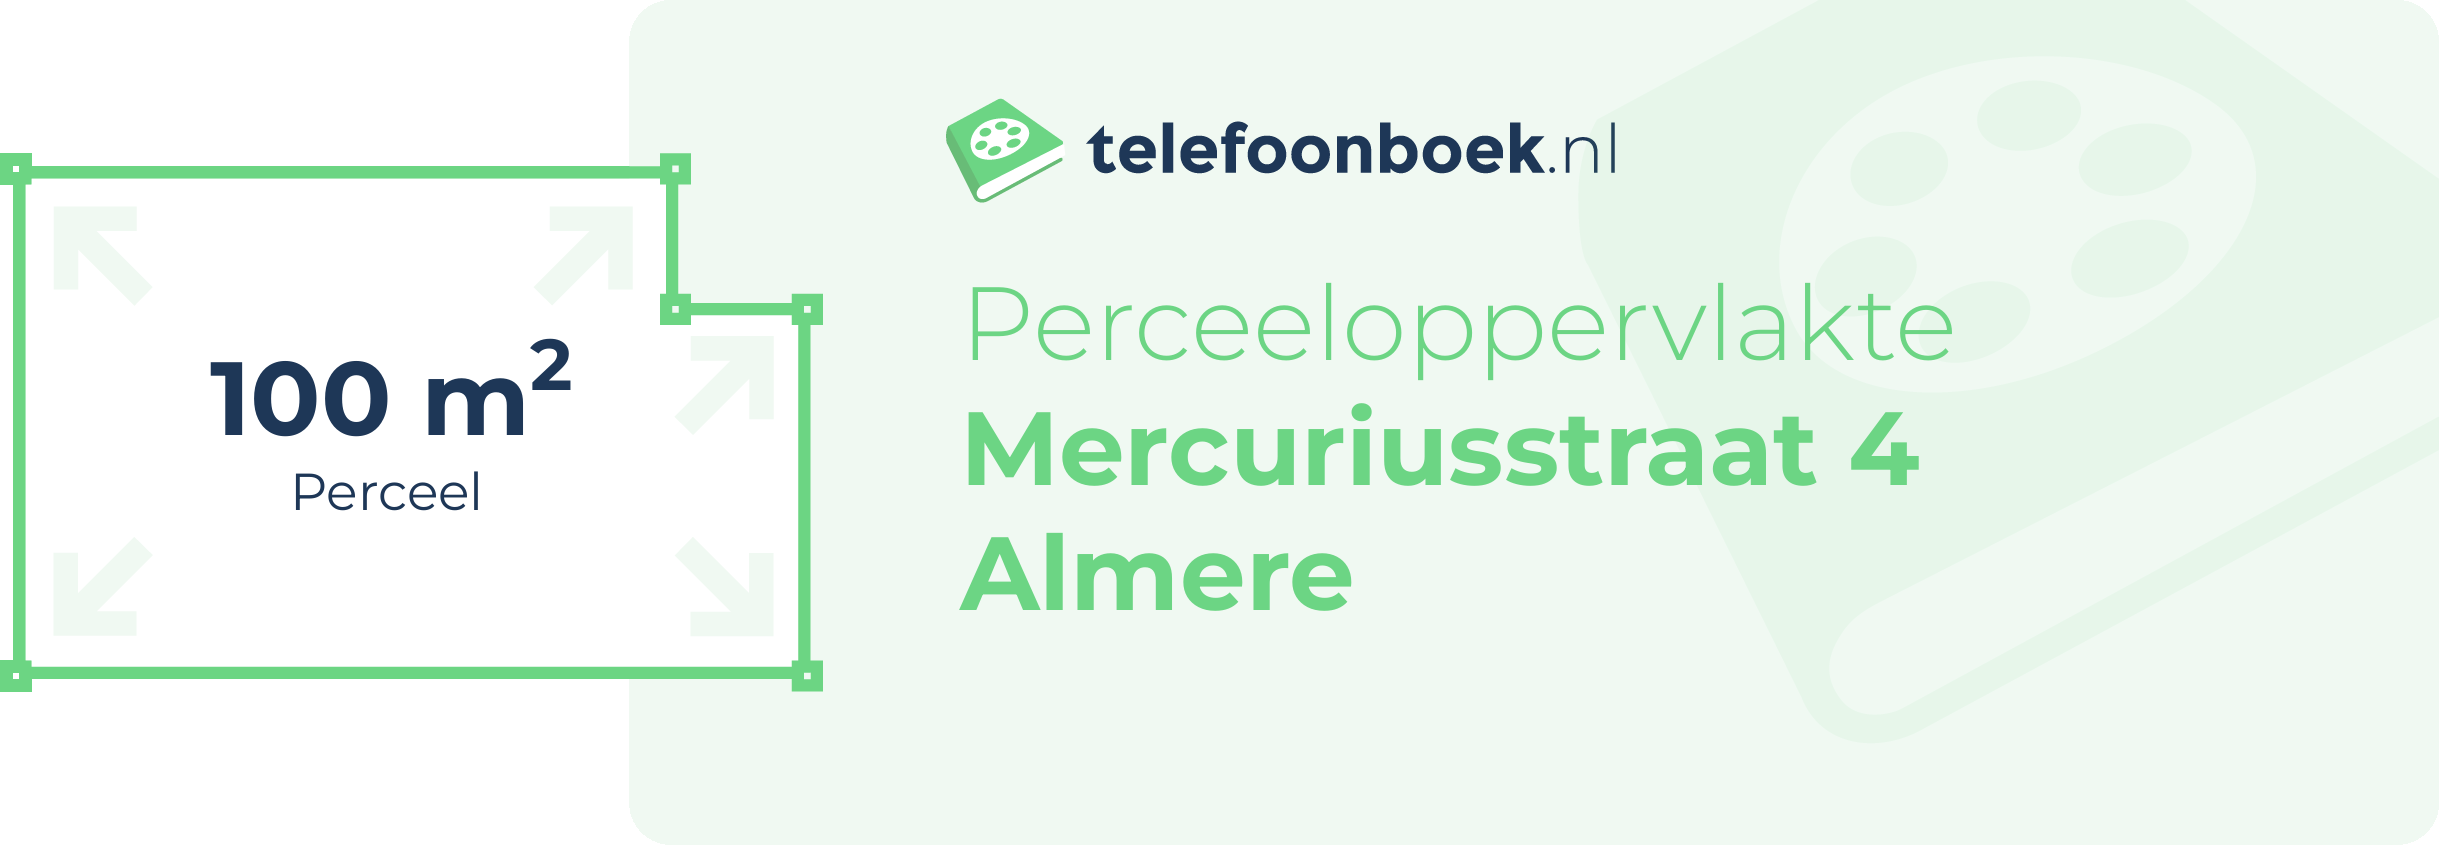 Perceeloppervlakte Mercuriusstraat 4 Almere